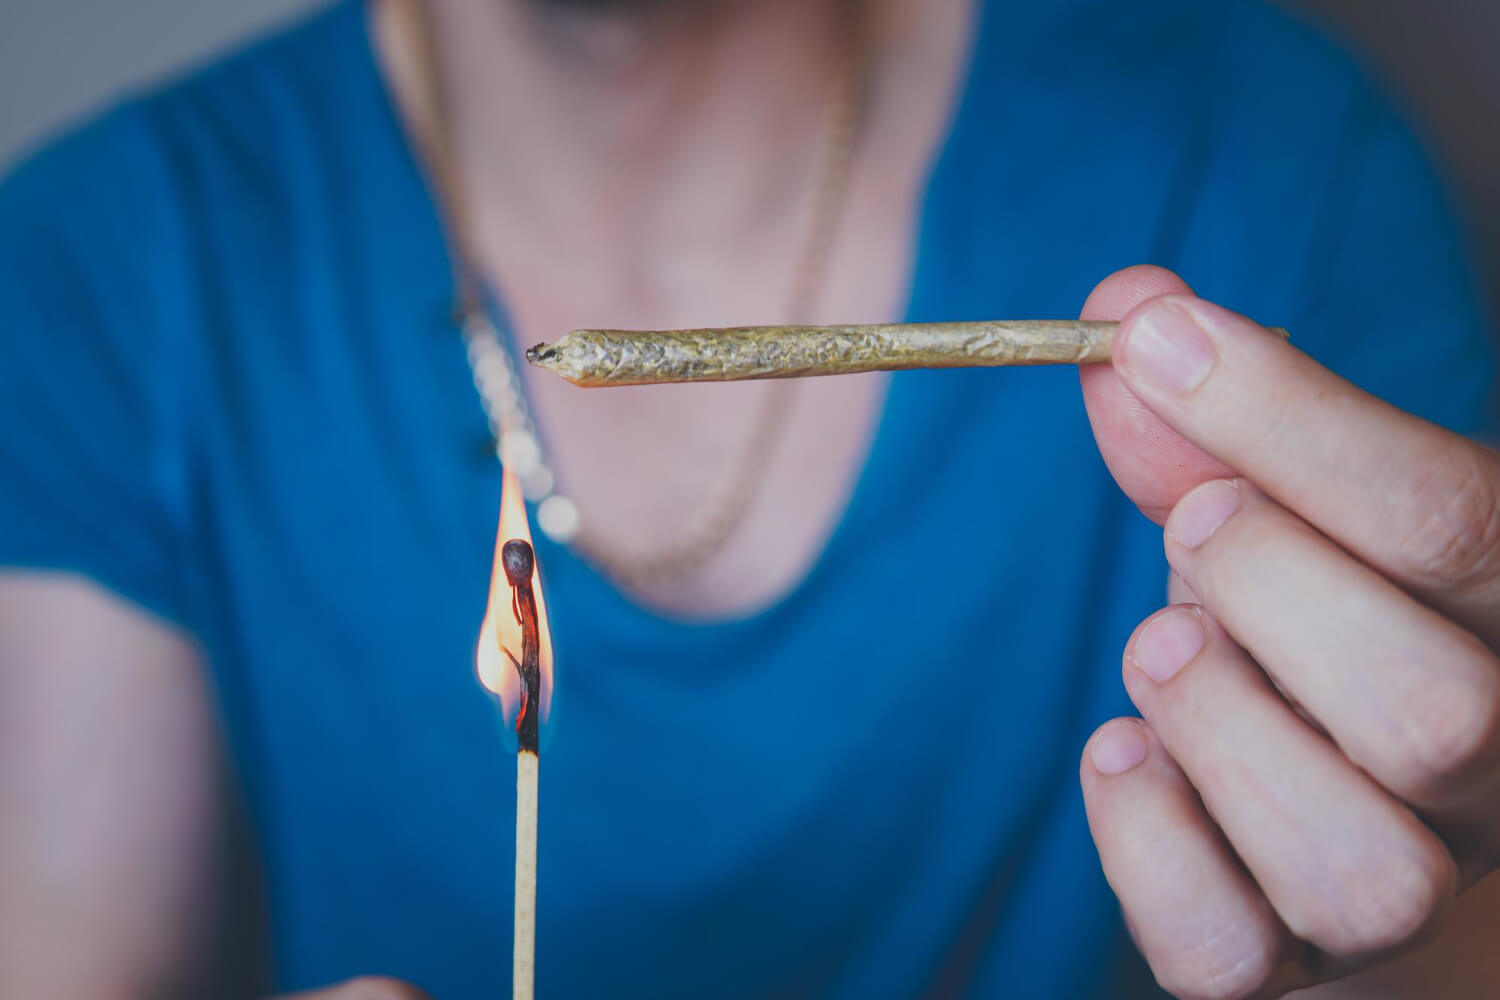 Ohio legalizes recreational marijuana